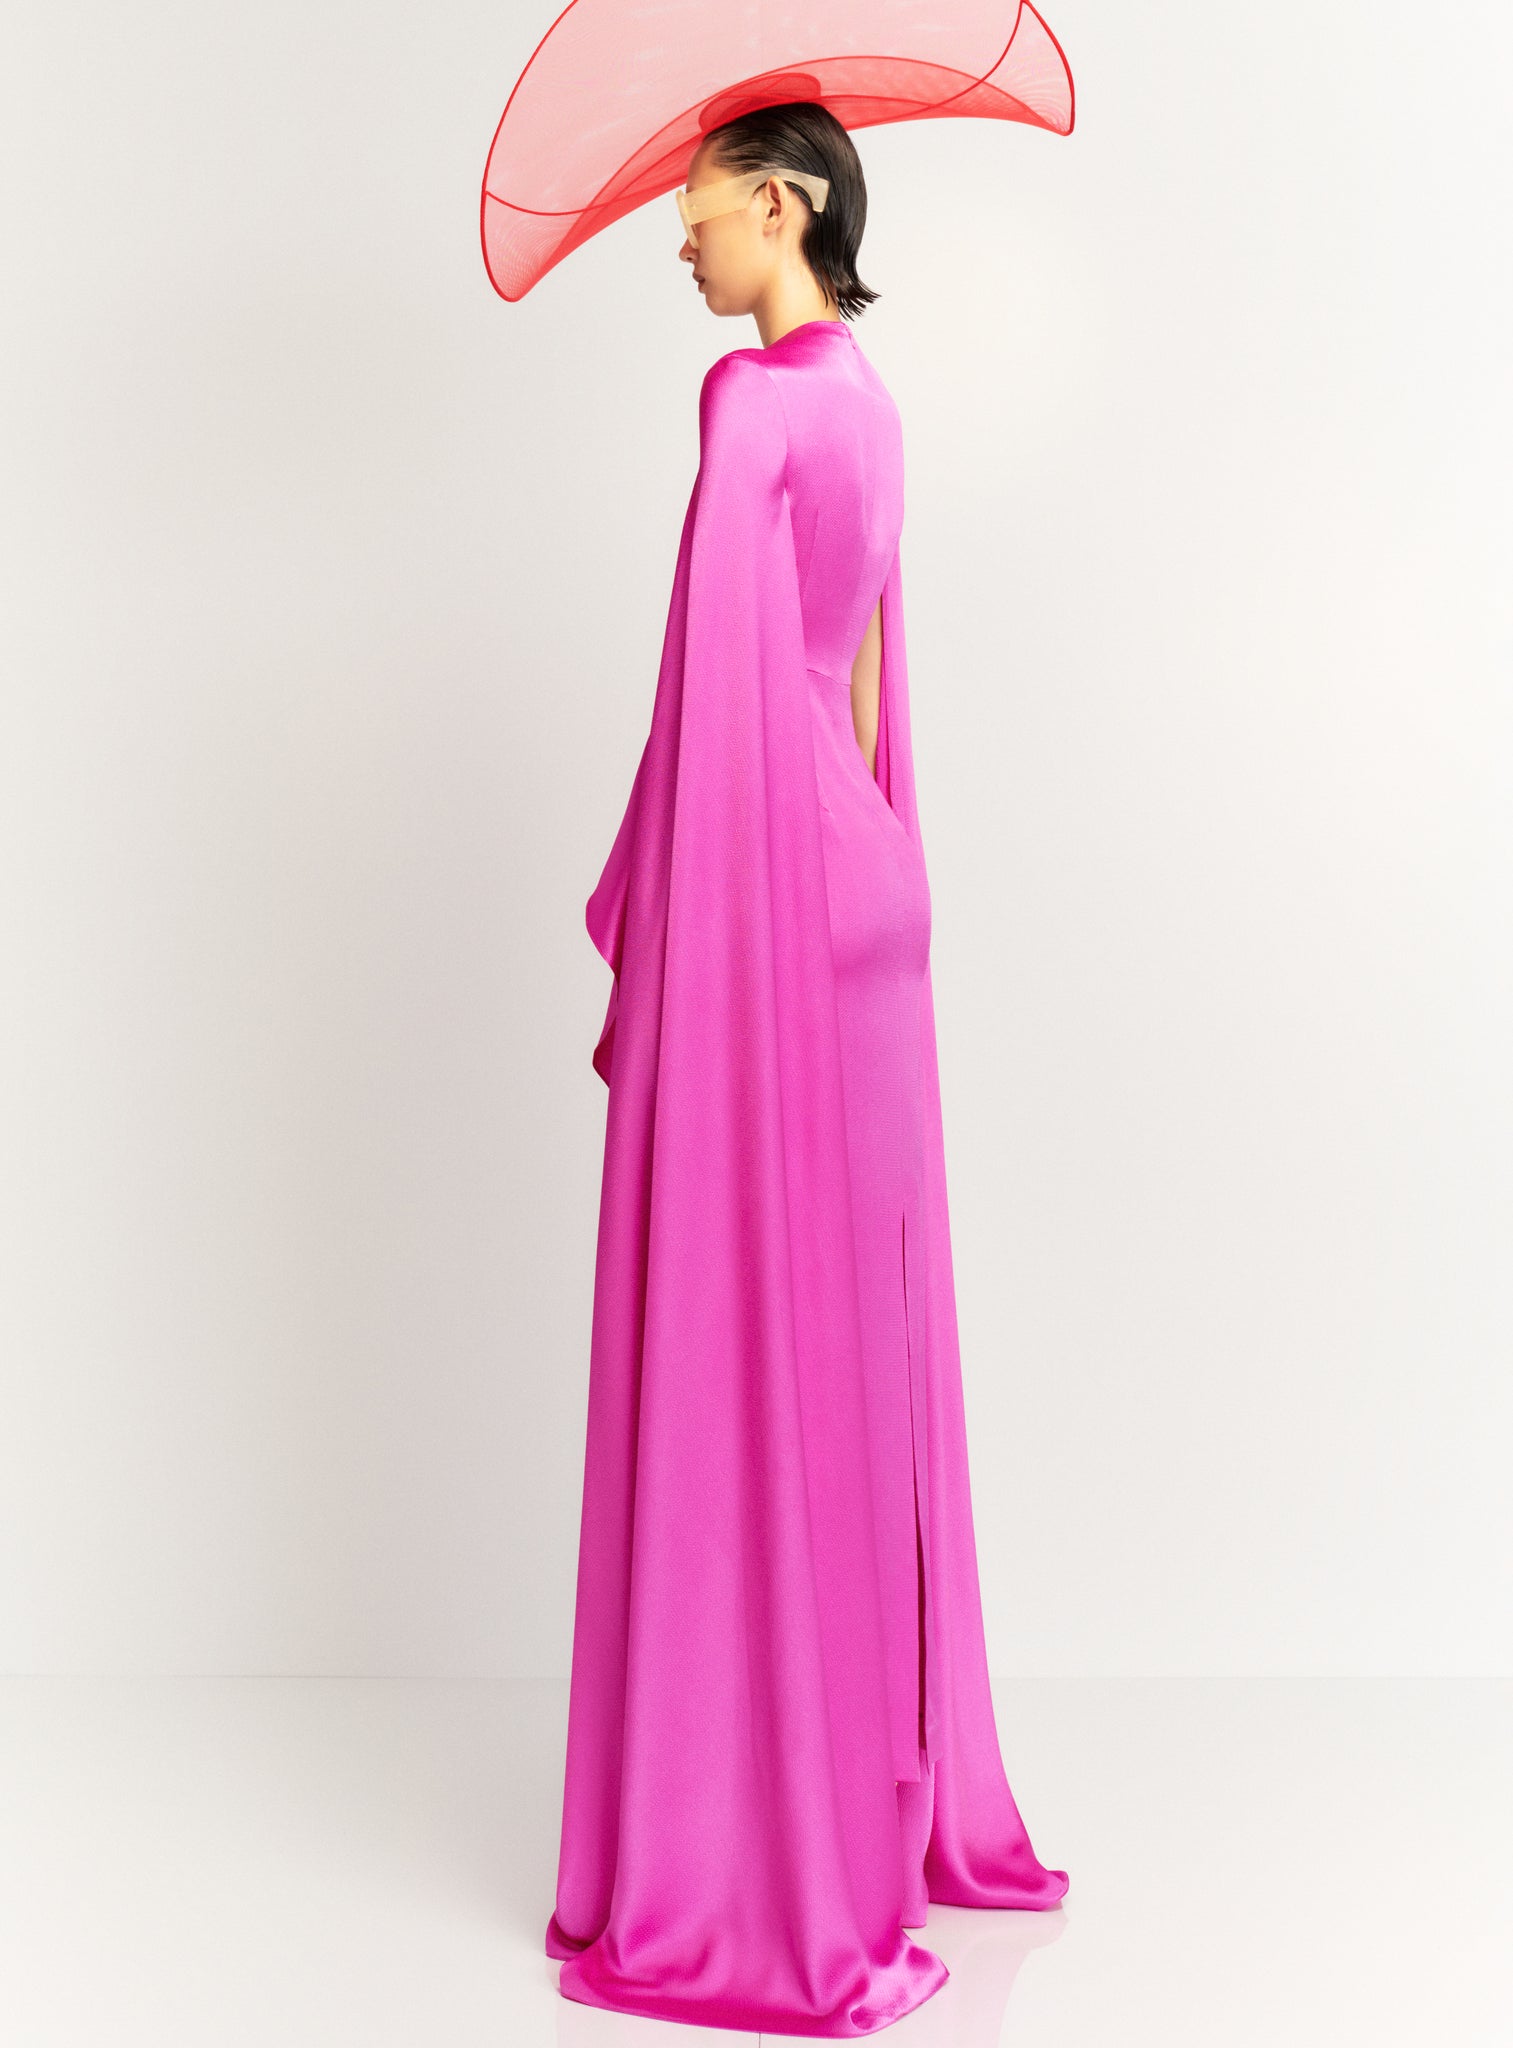 The Elya Maxi Dress in Pink